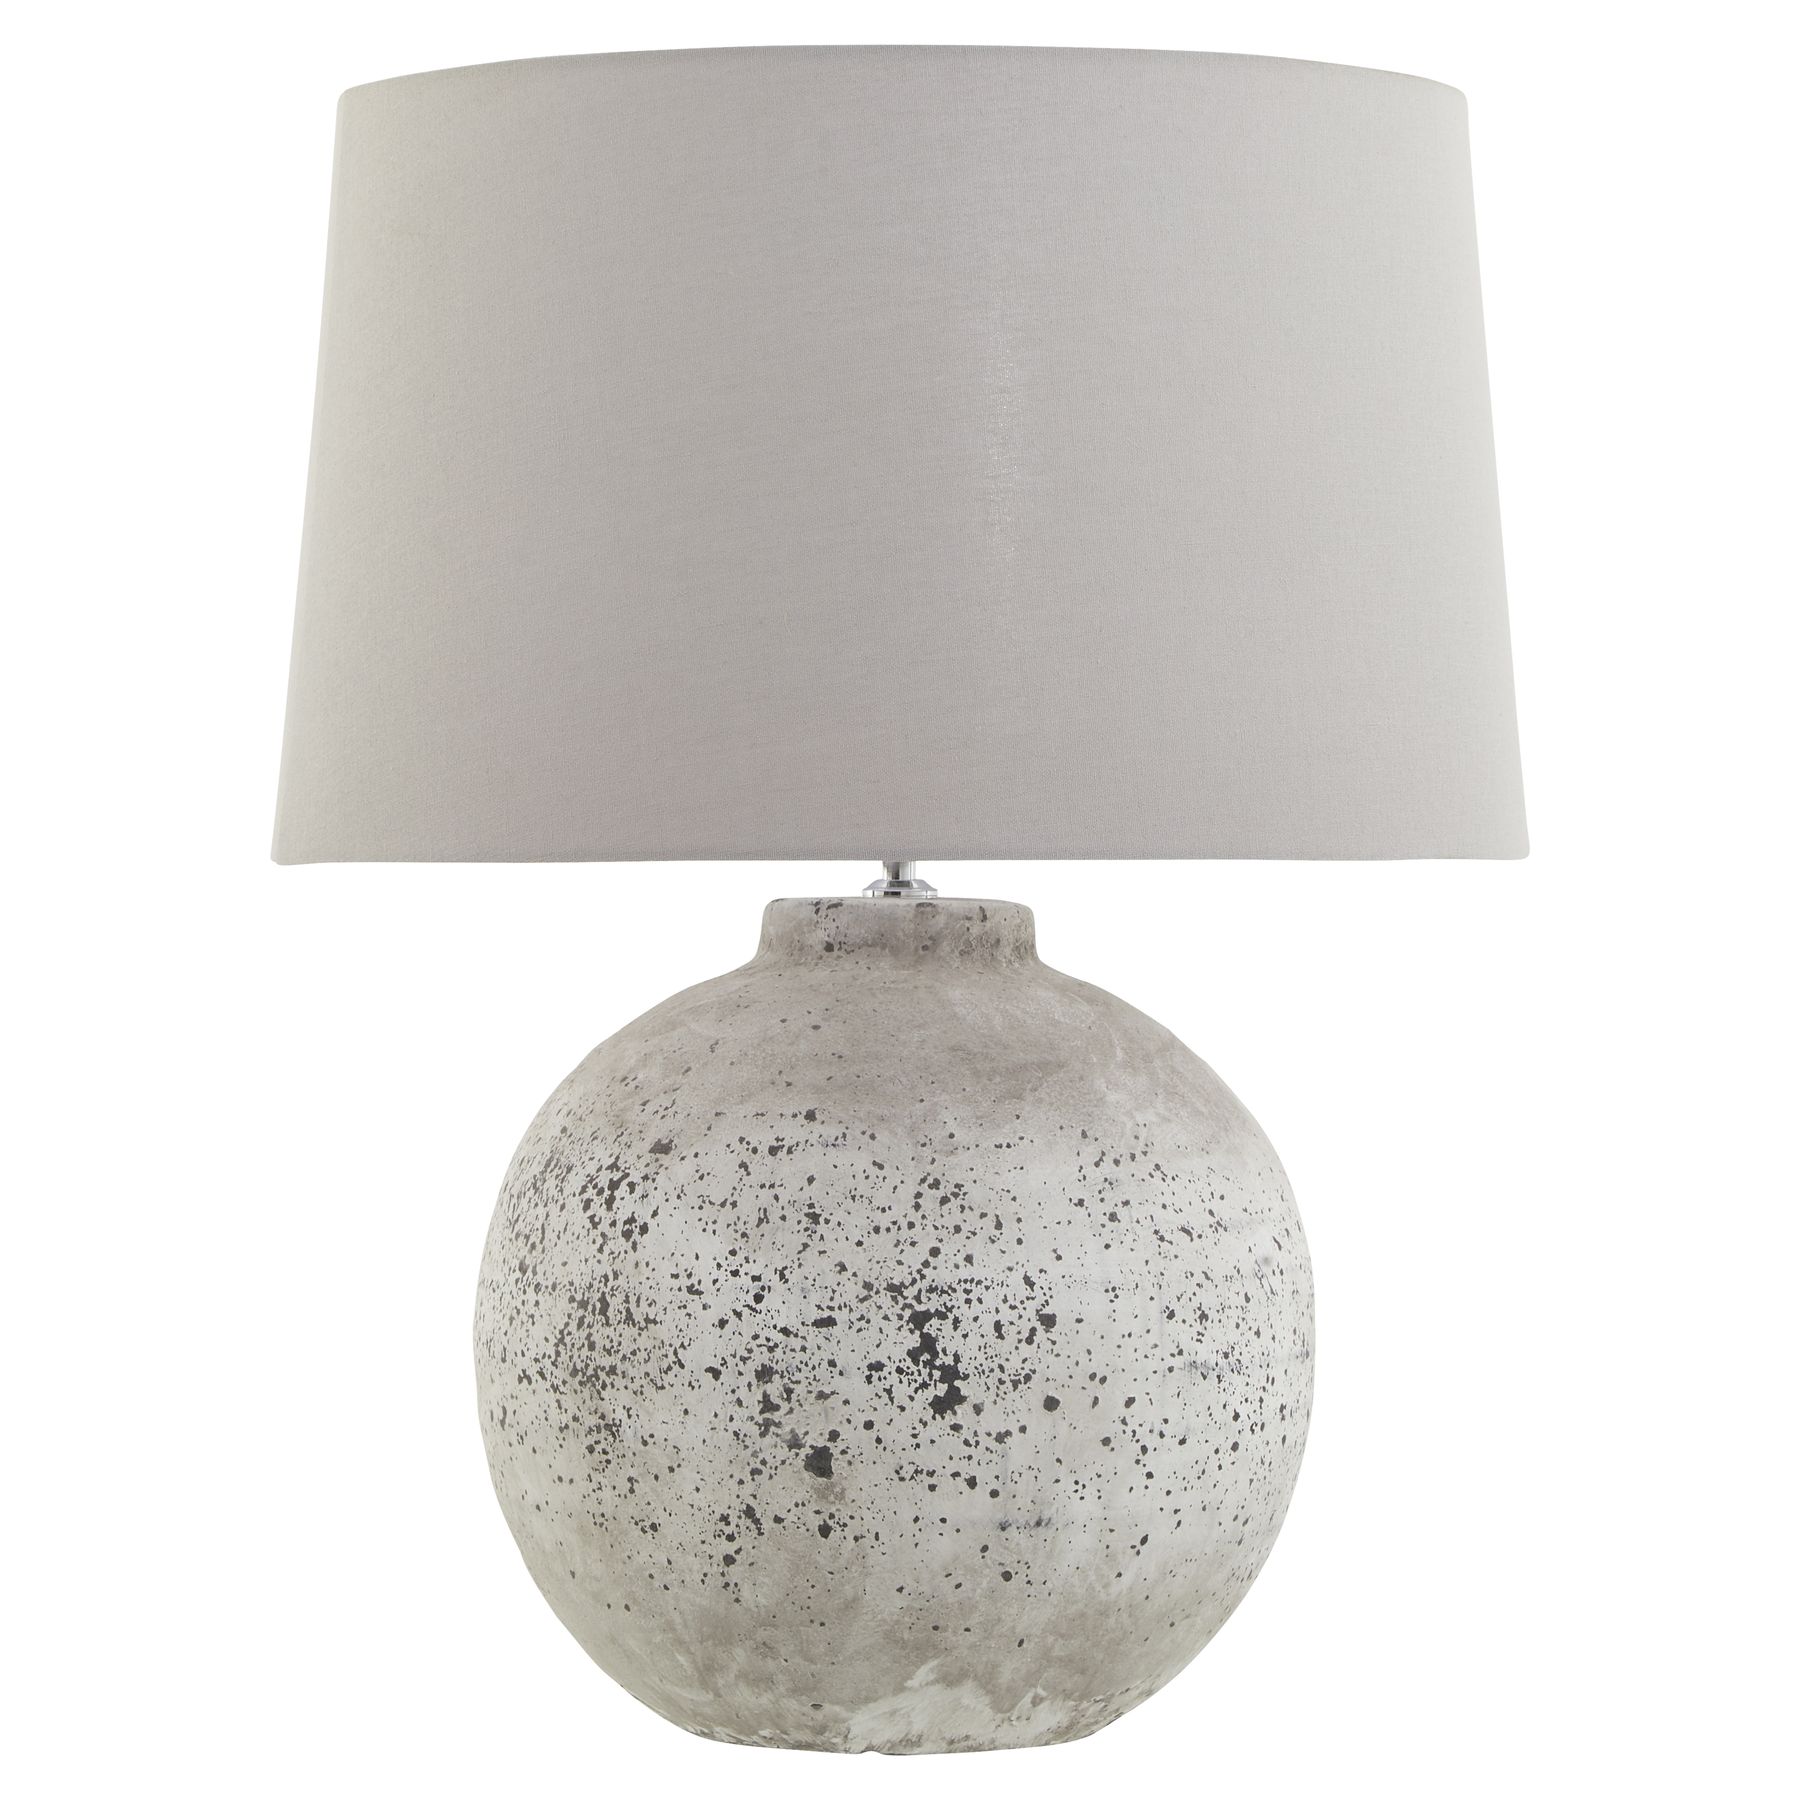 Tiber Large Stone Ceramic Lamp - Image 1